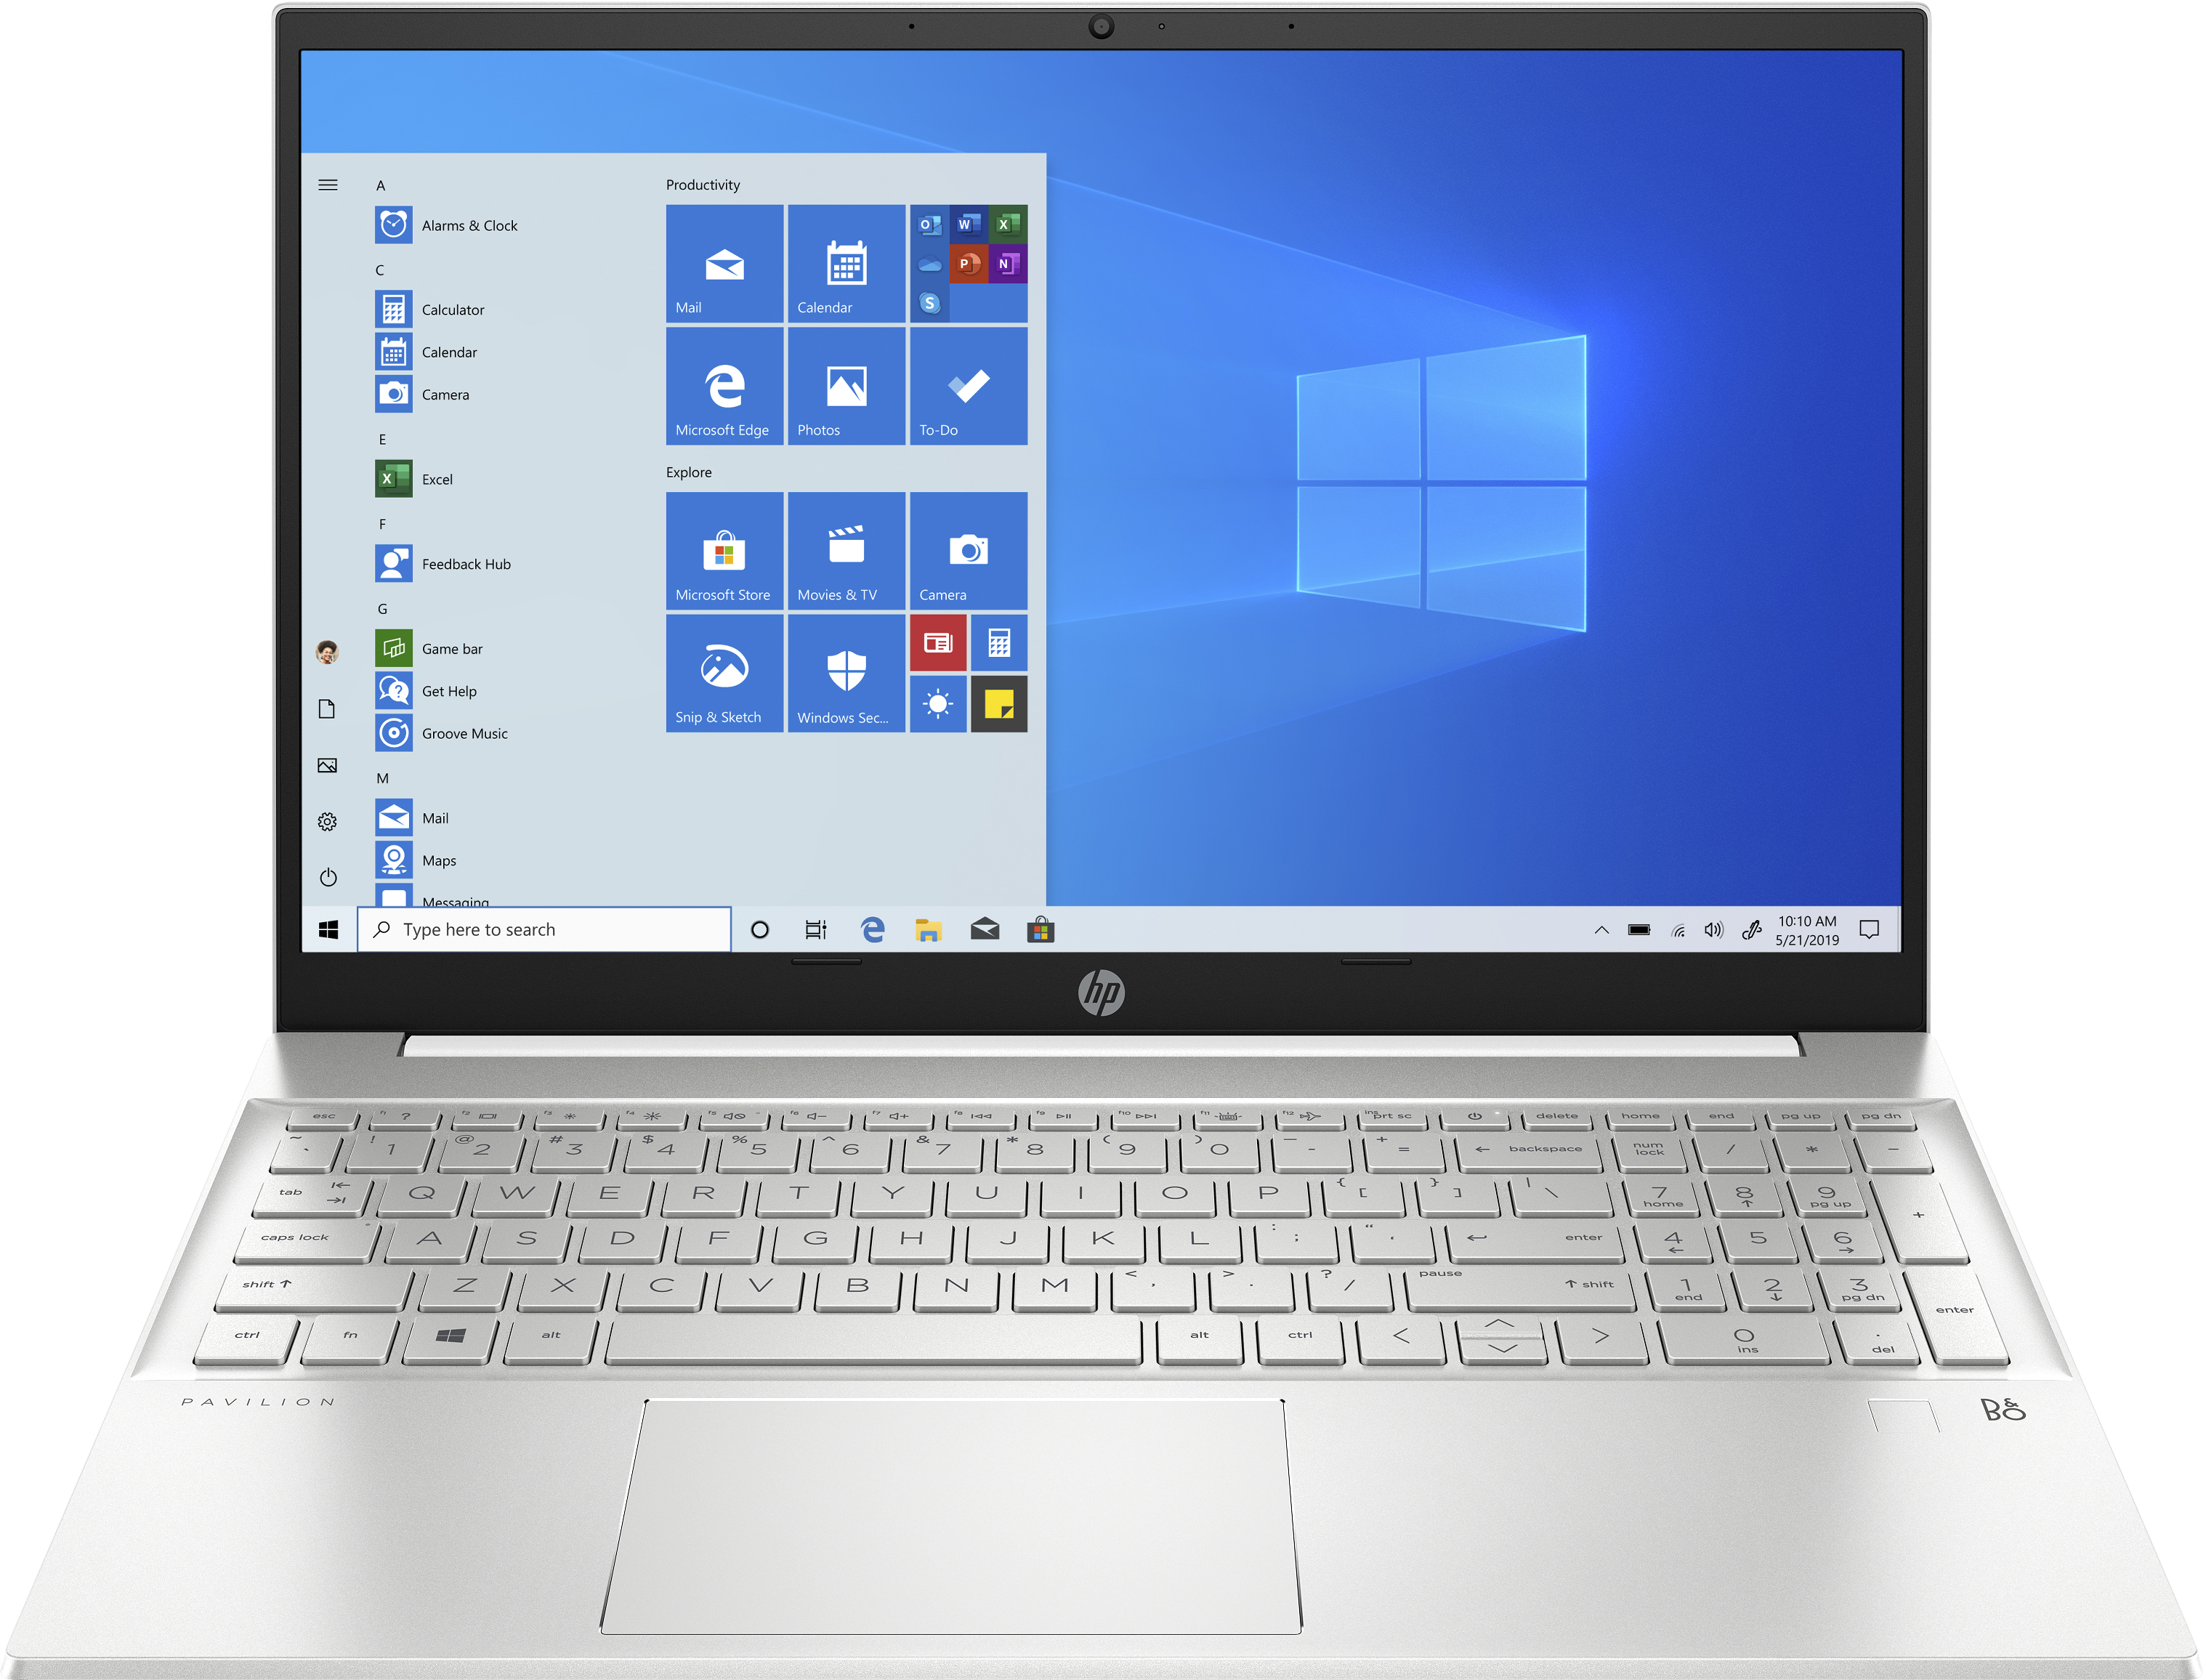 windows 7 laptops 2019